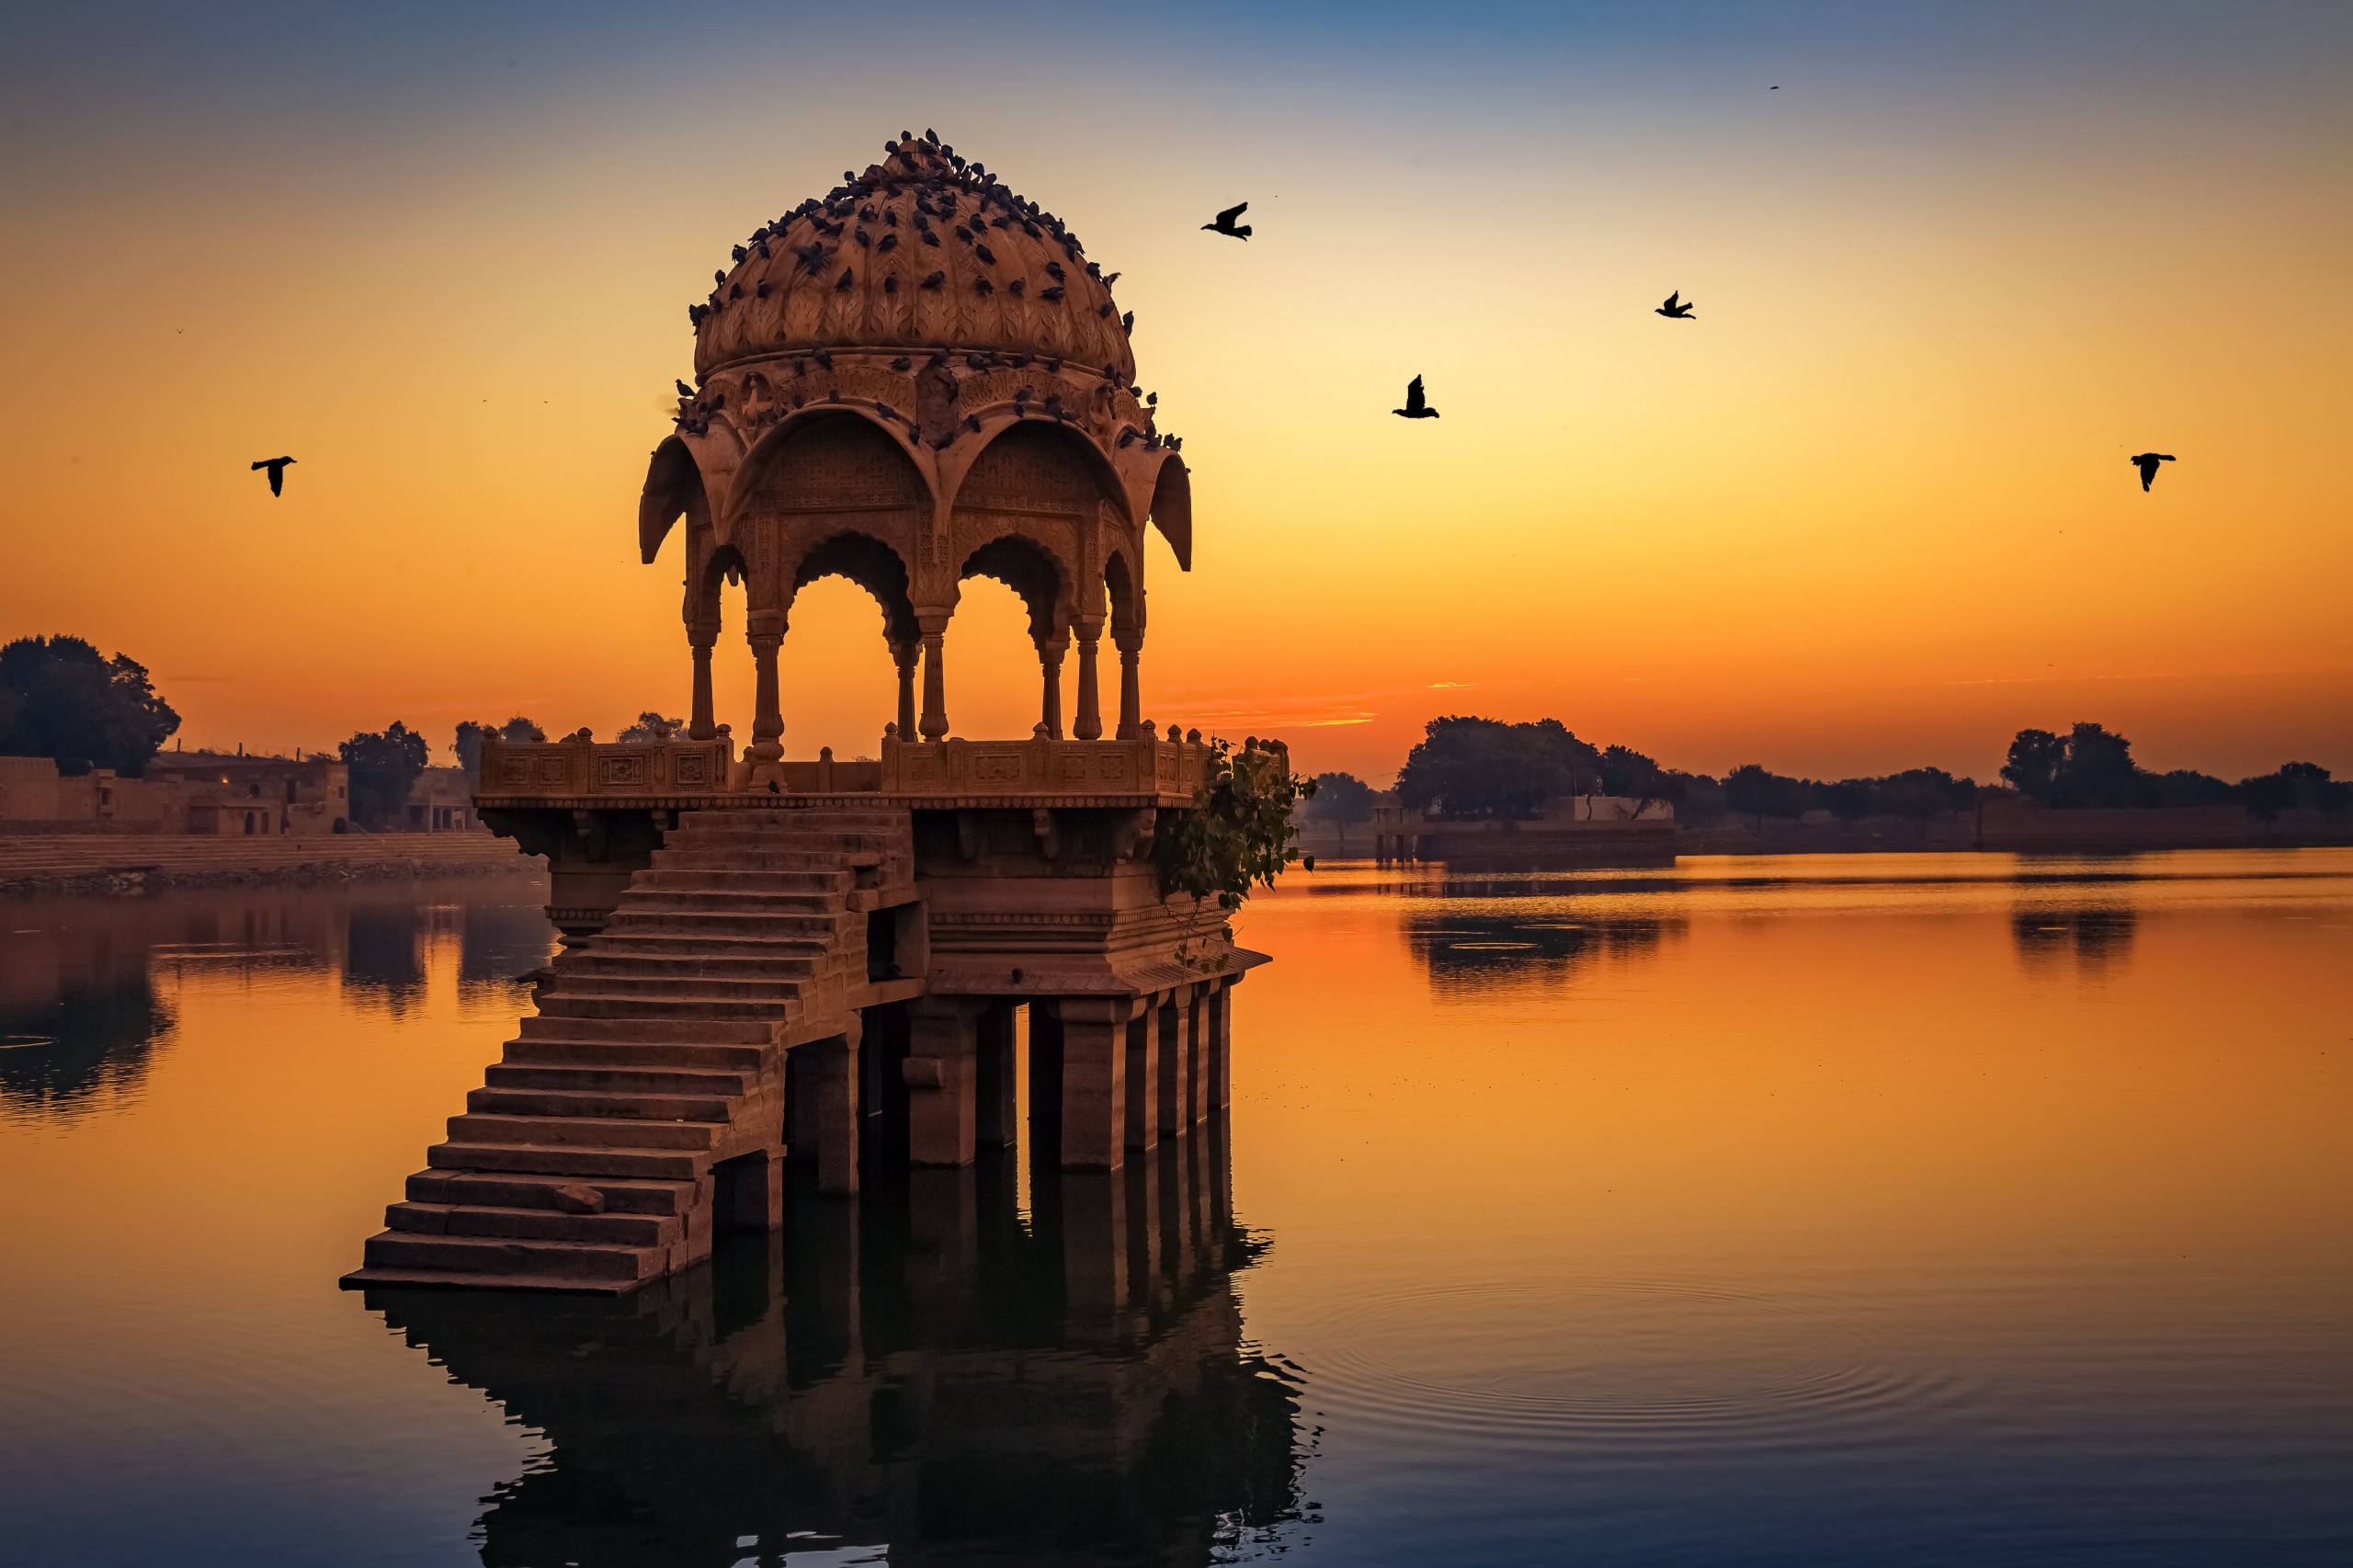 jaipur tourism website